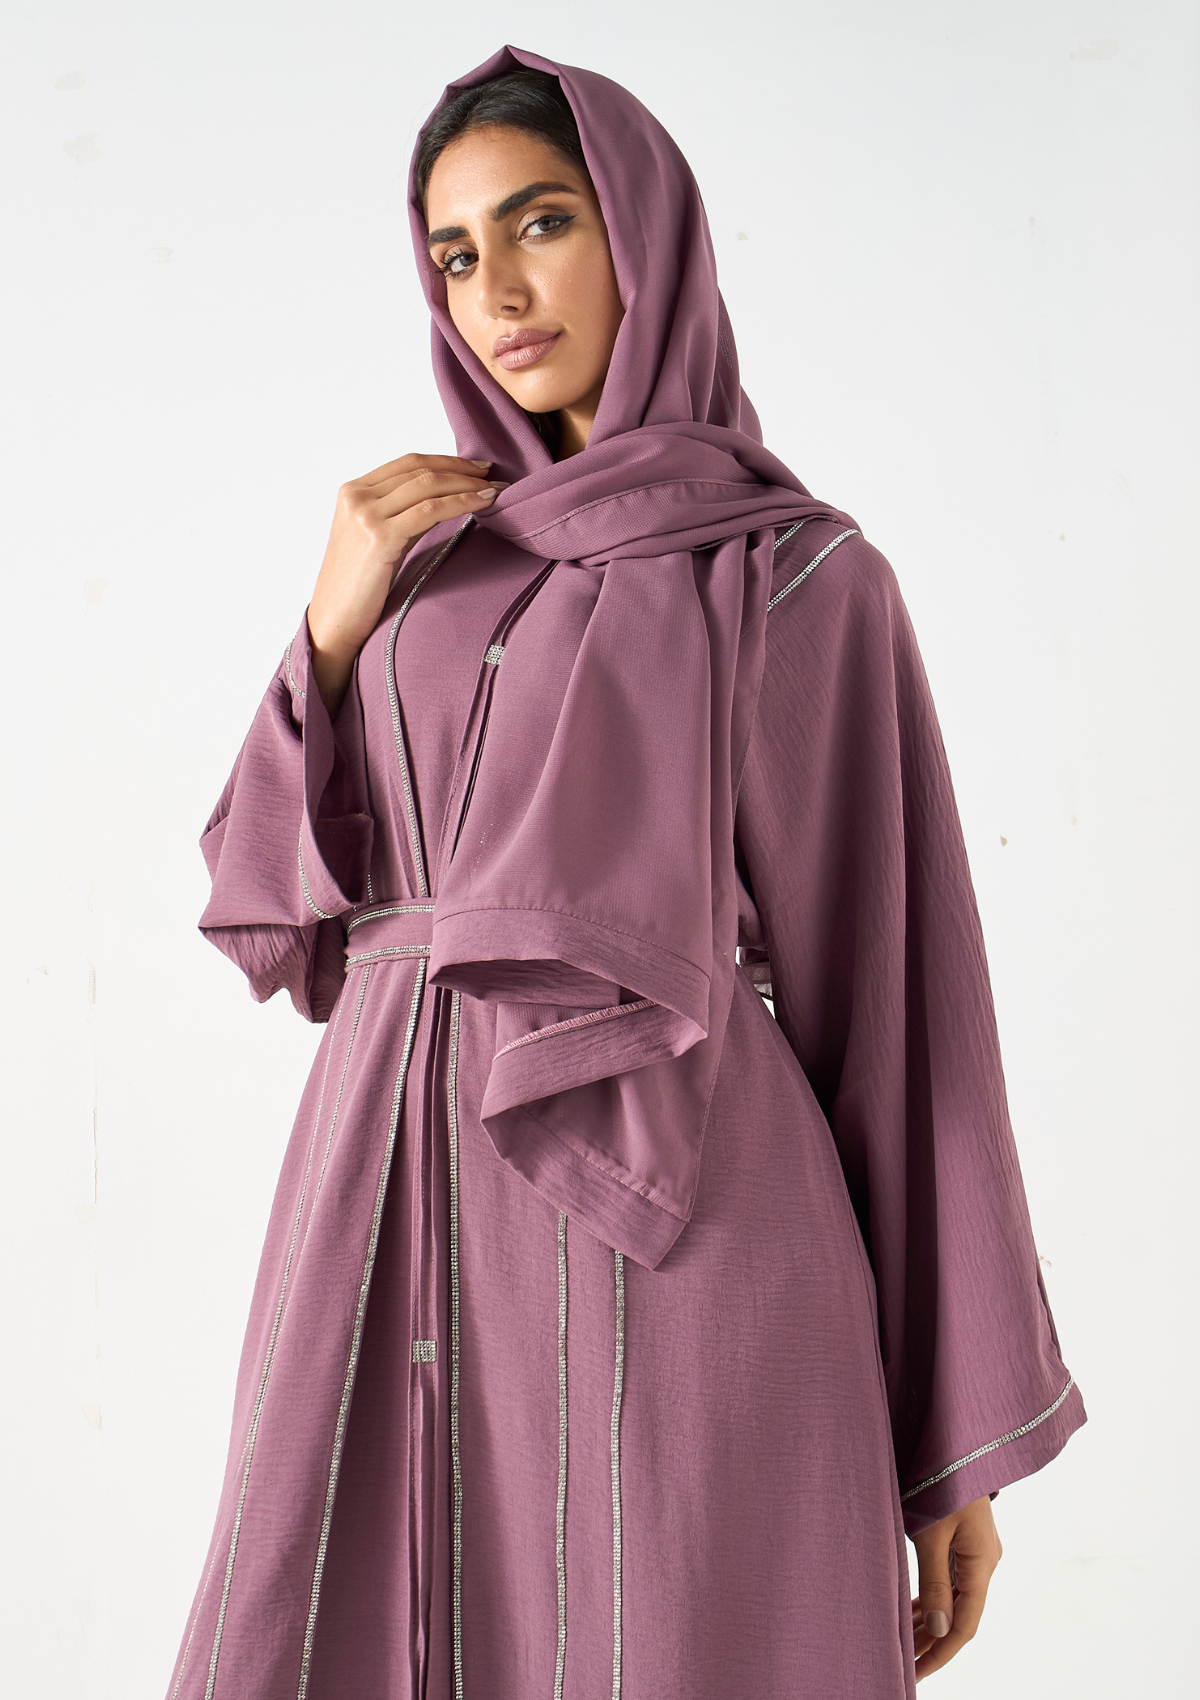 Embellished Abaya with Hijab and Belt